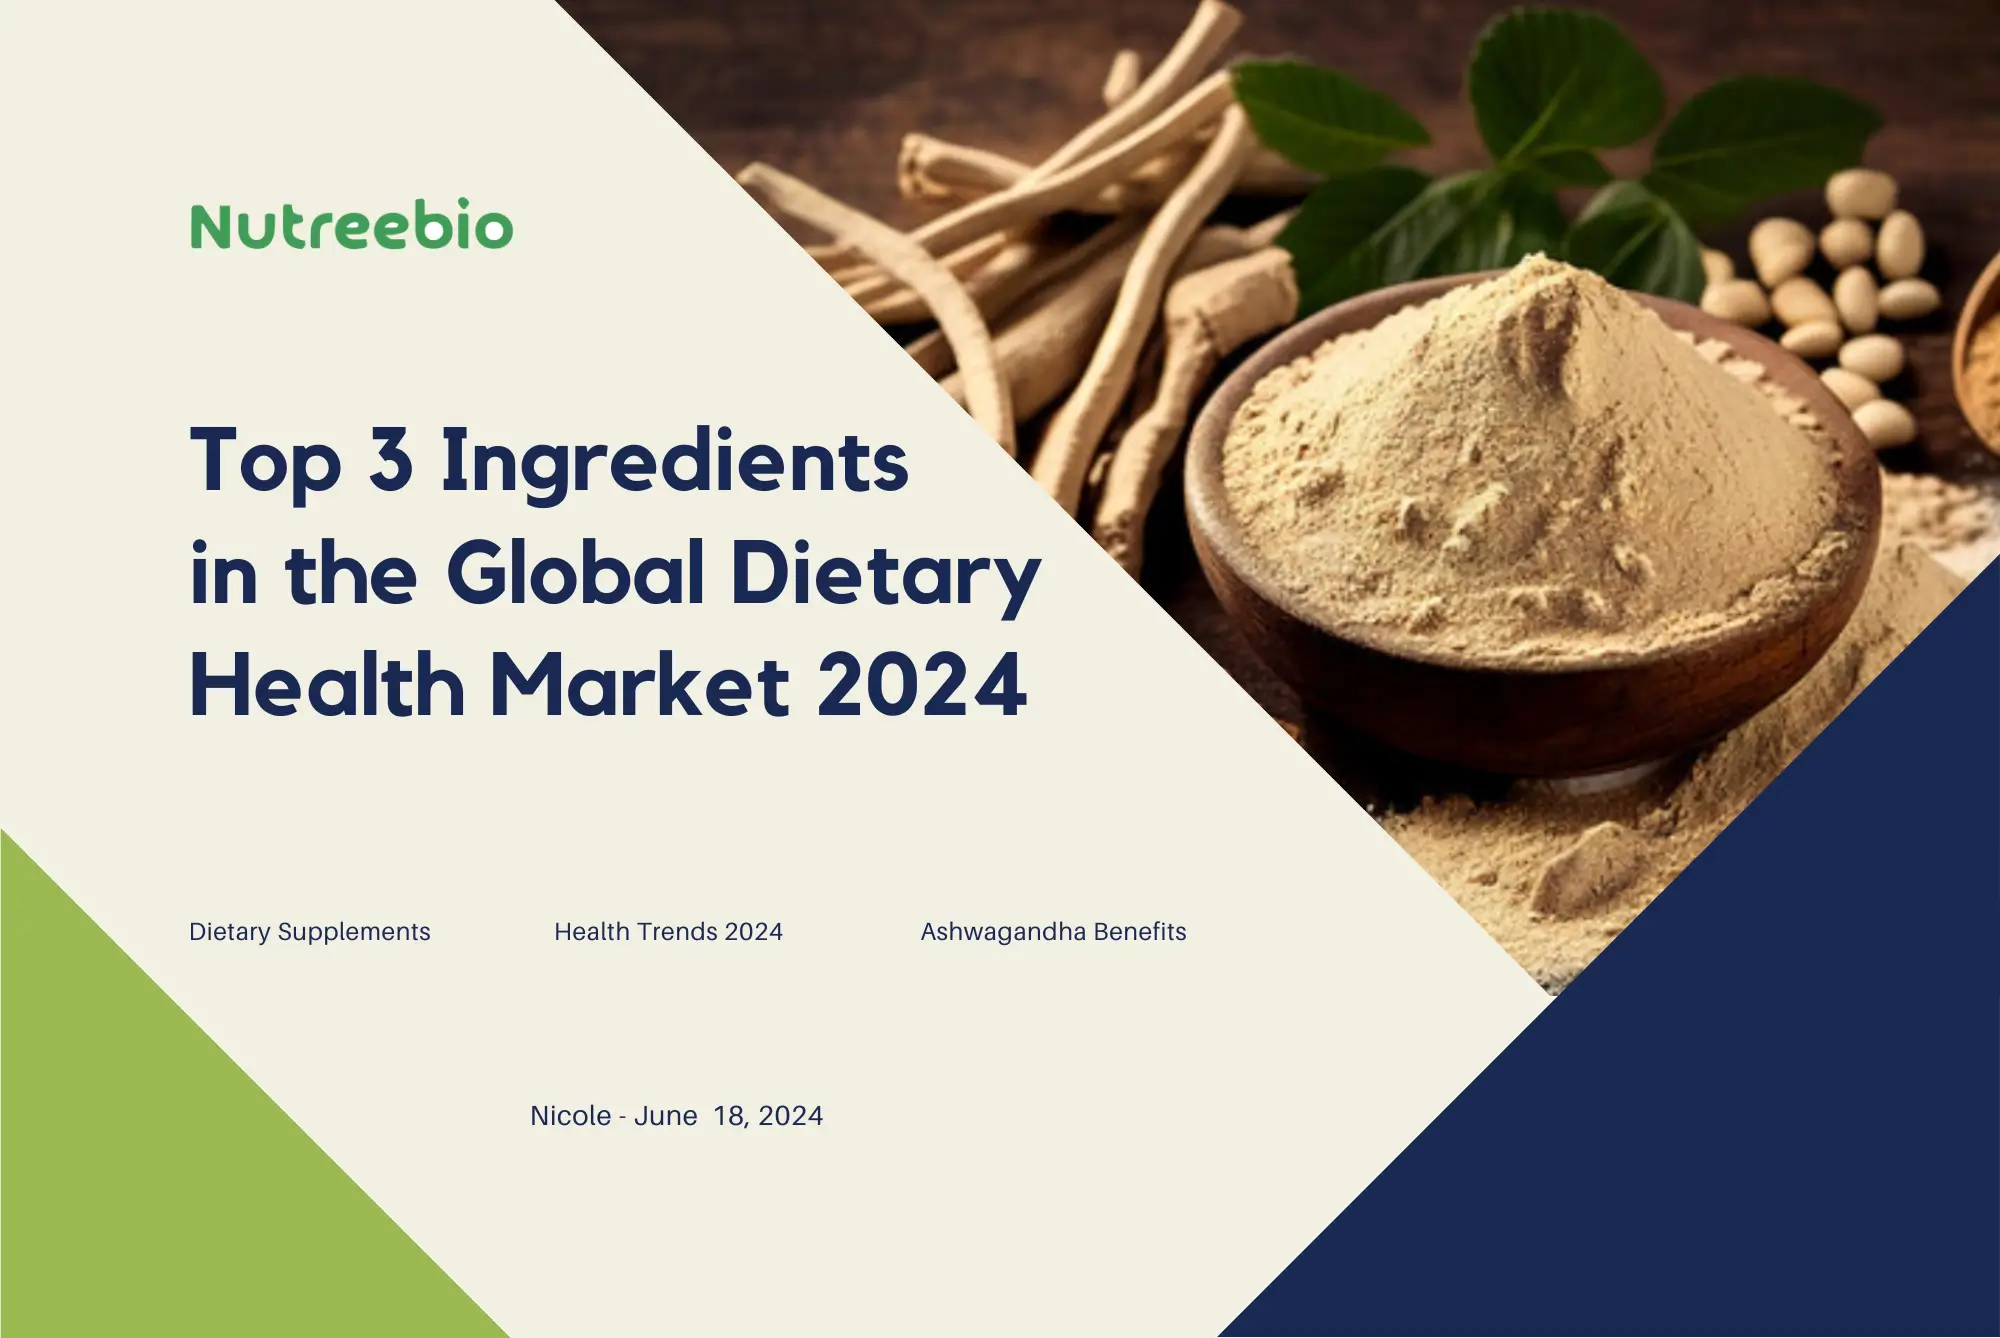 Three popular ingredients in the global dietary health market in 2024